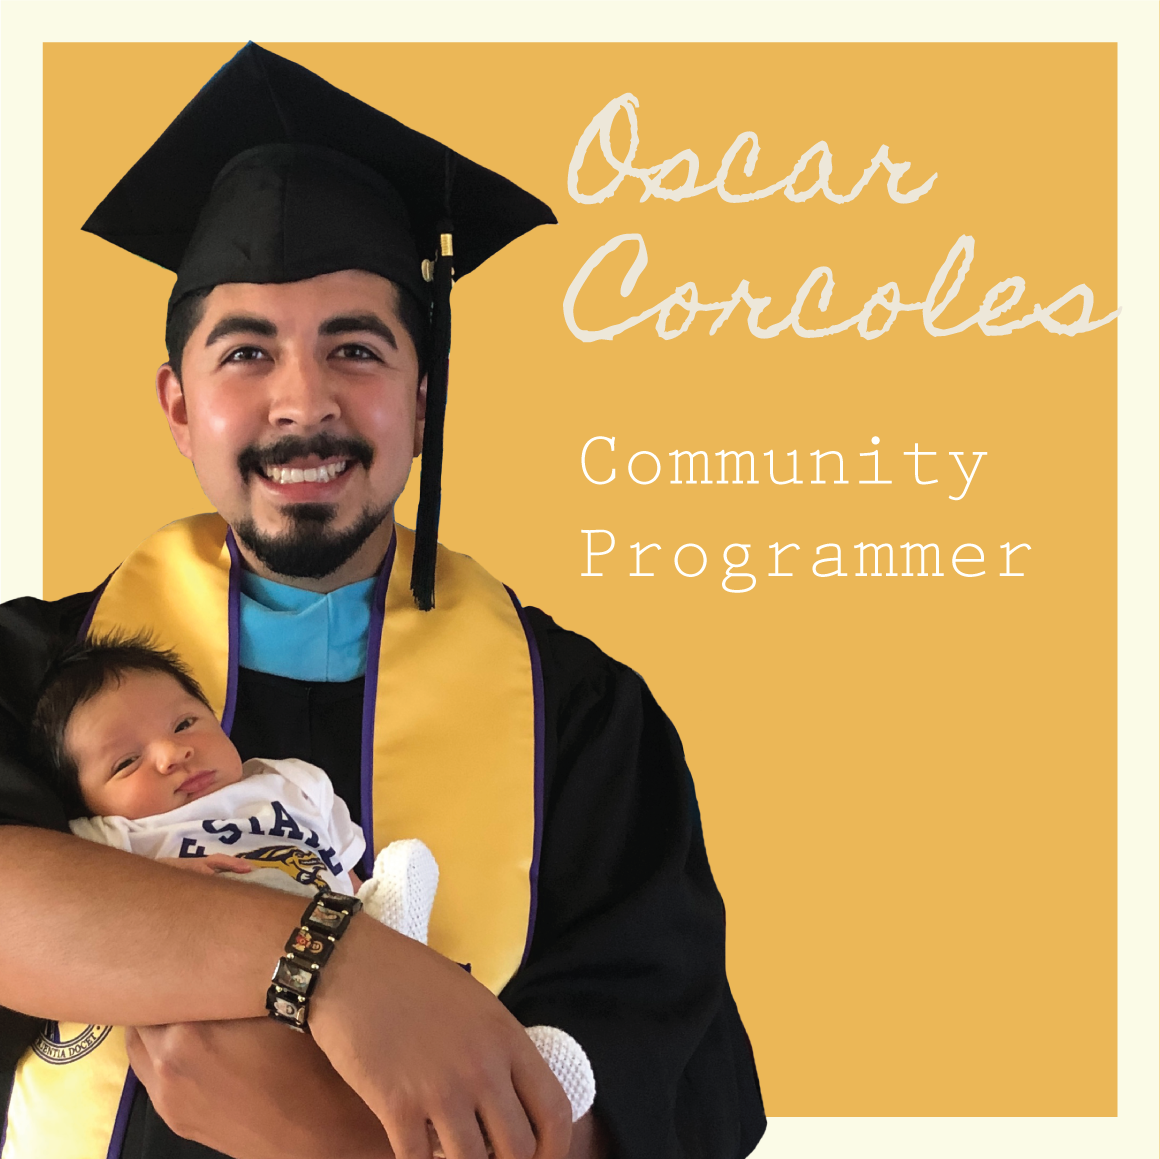 Oscar Corcoles: Community Programmer